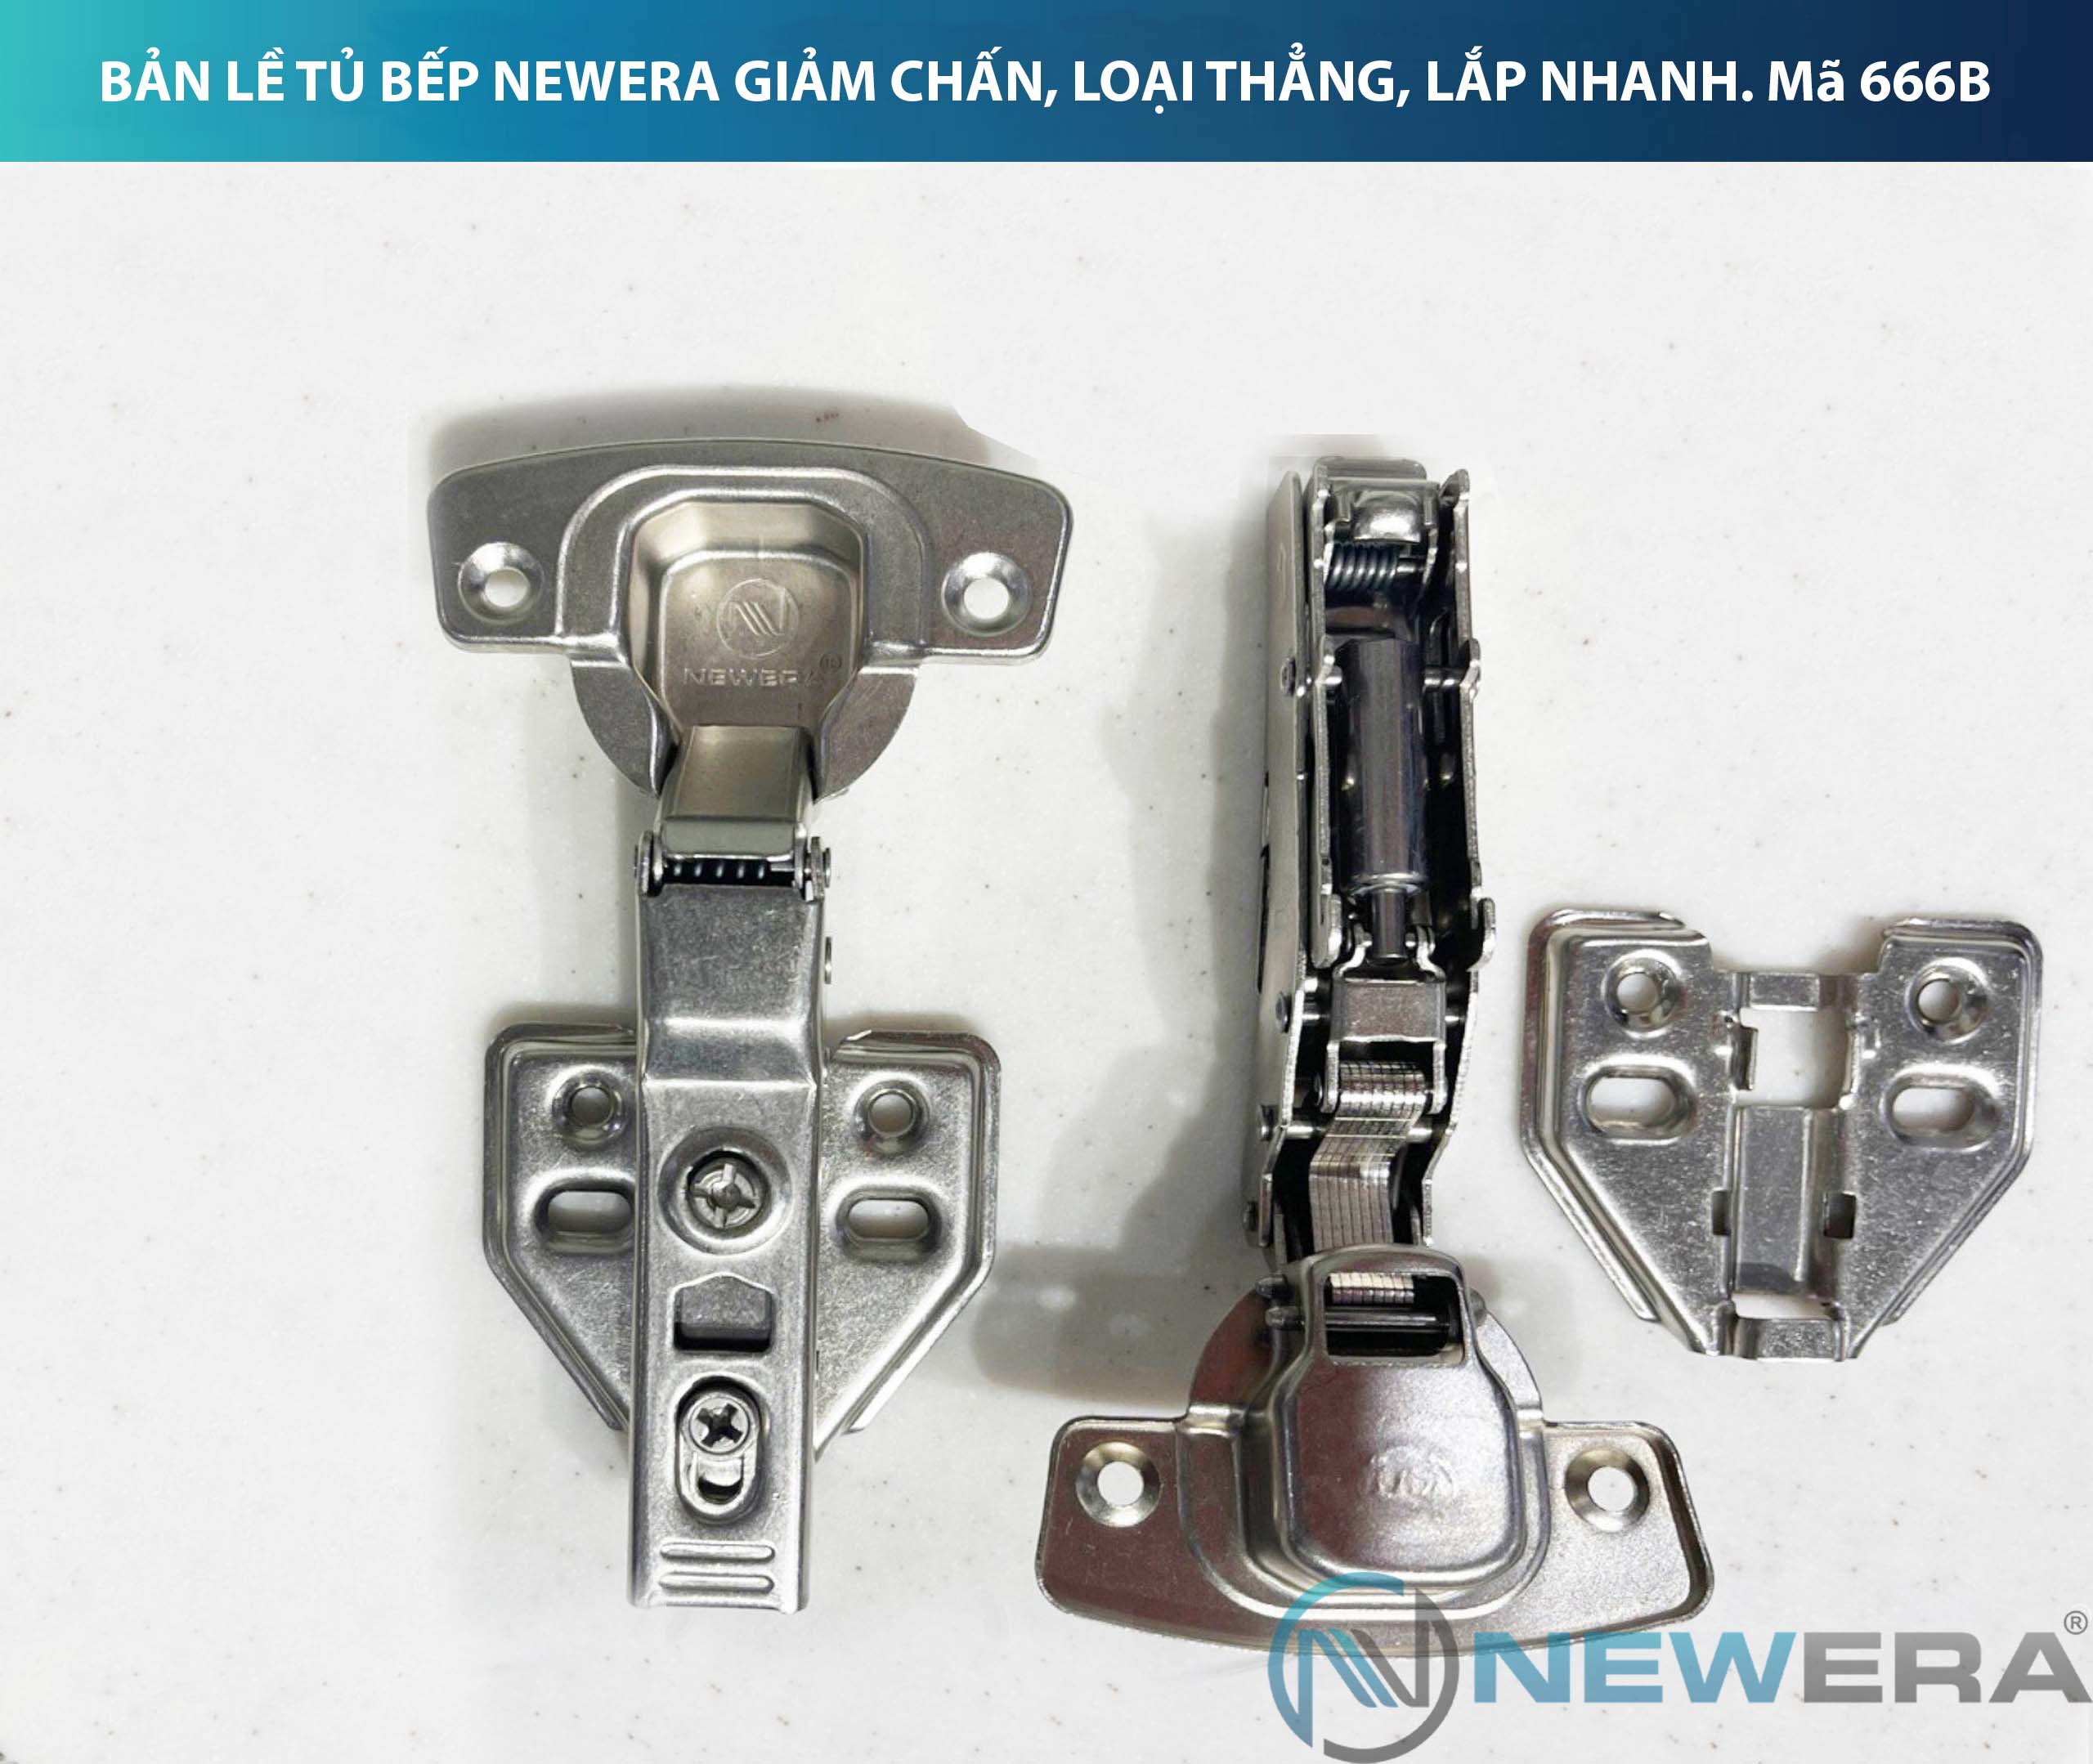 Ban le NewEra 666B giam chan lap nhanh Tan Ky Nguyen